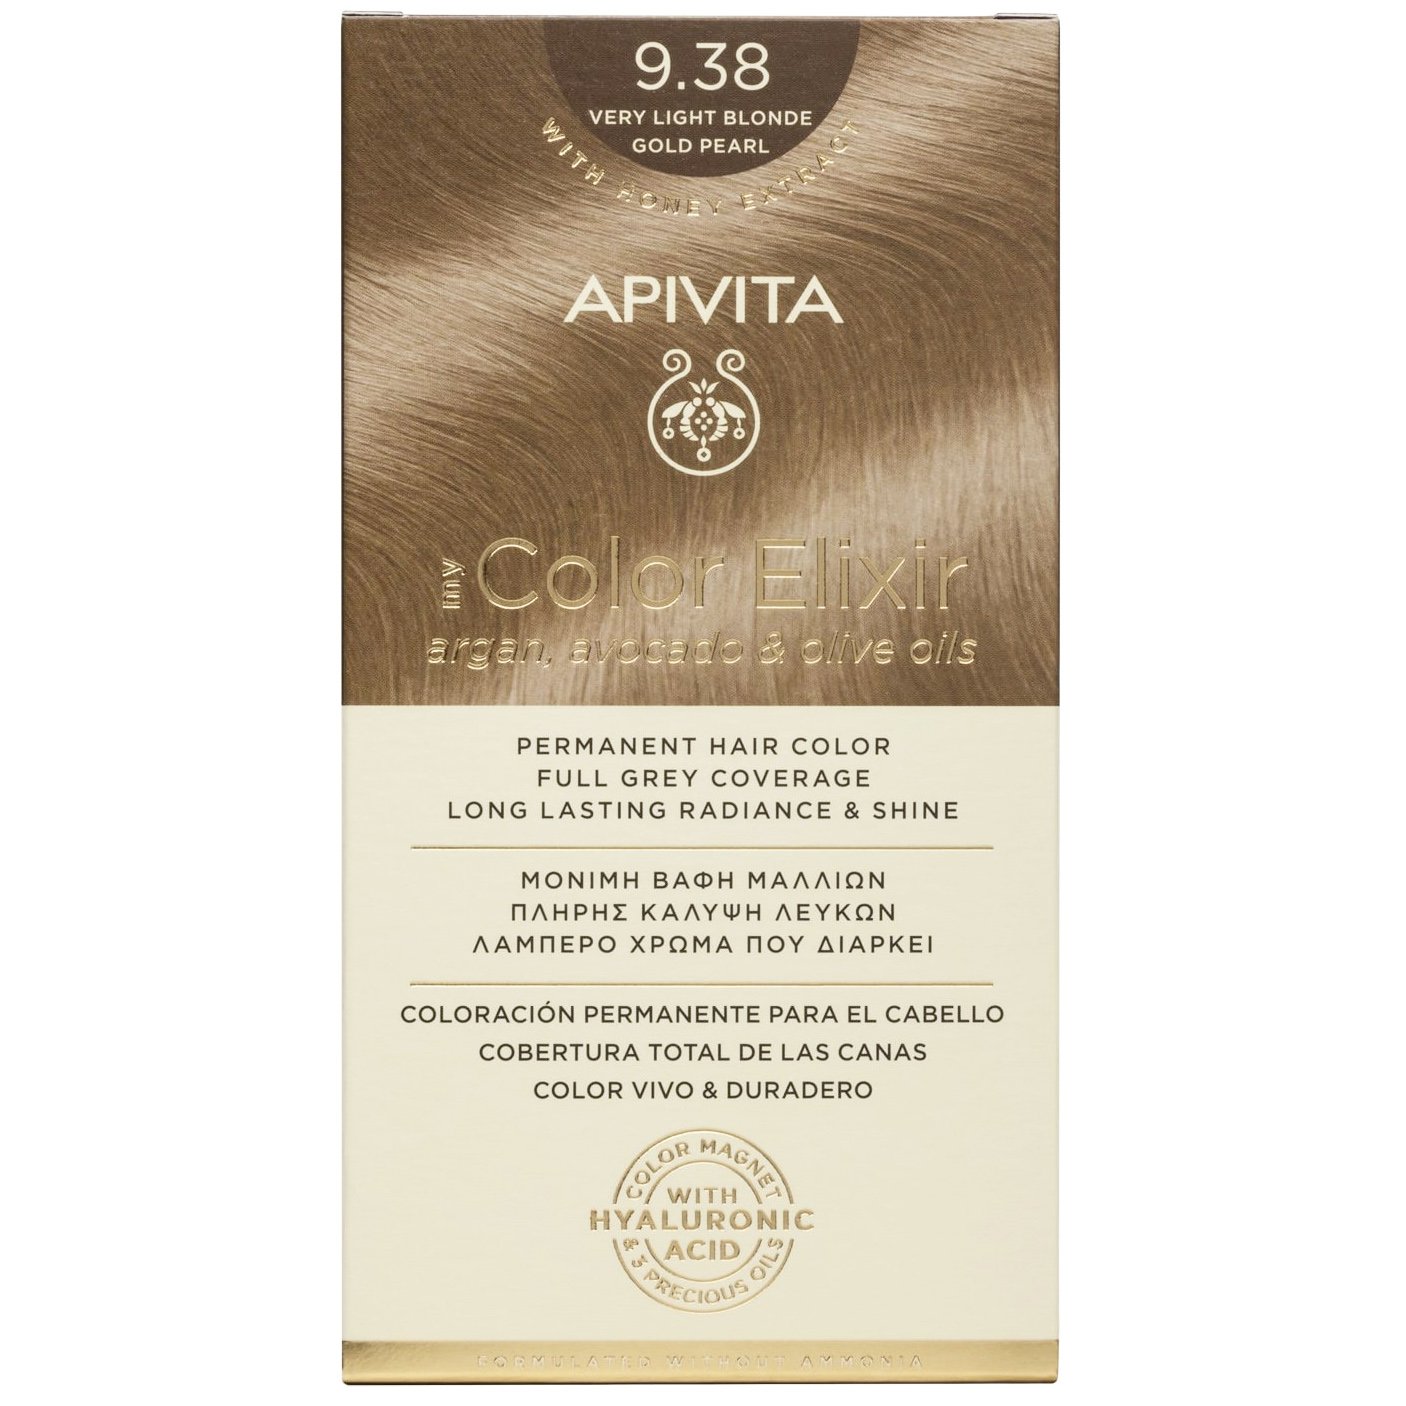 Apivita Promo My Color Elixir Permanent Hair Color Μόνιμη Βαφή Μαλλιών για Λαμπερό Χρώμα που Διαρκεί – 9.38 Ξανθό Πολύ Ανοιχτό Μελί Περλέ